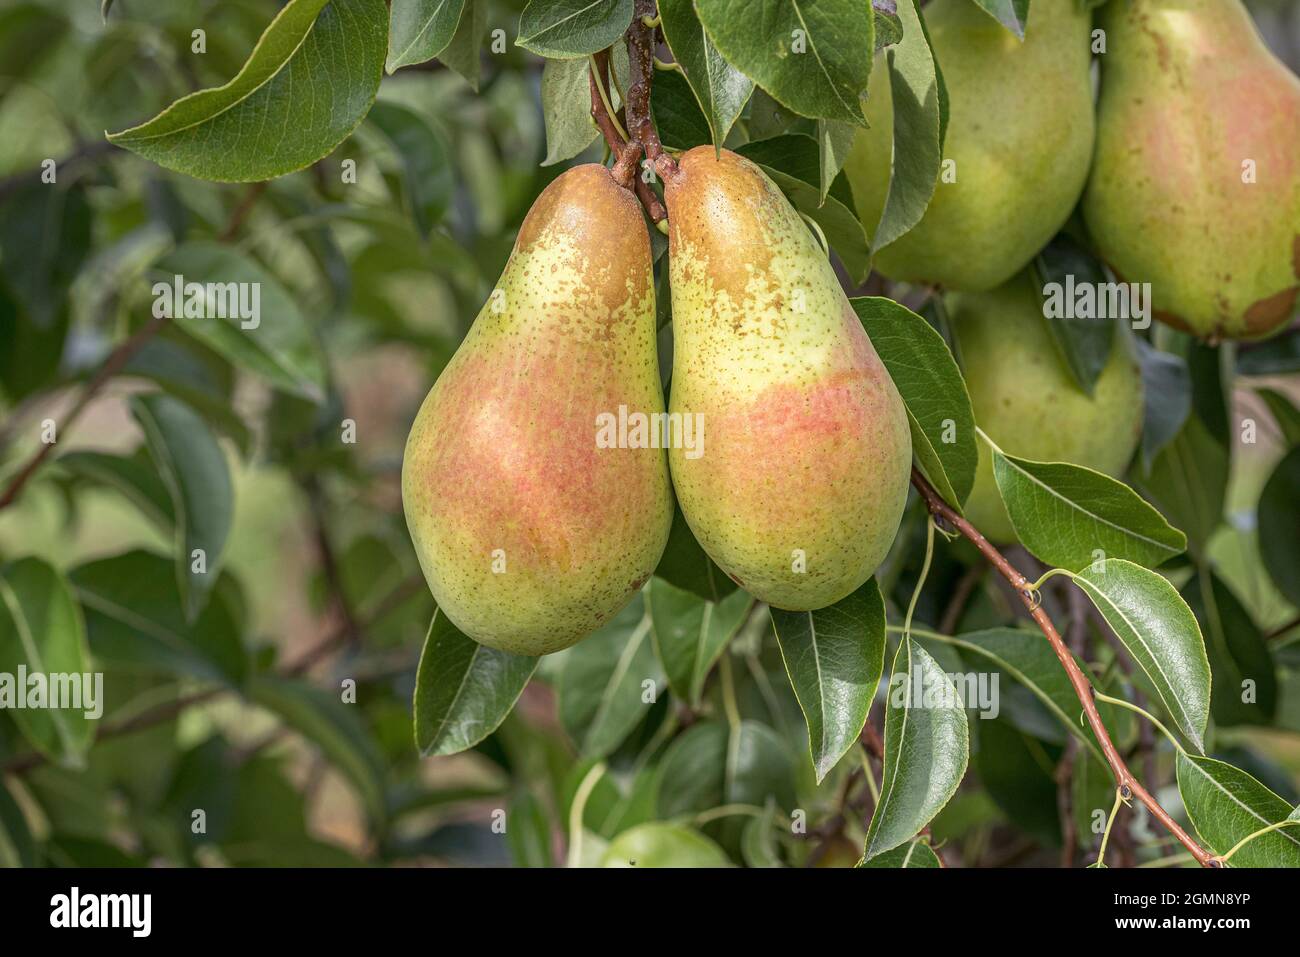 Common pear (Pyrus communis 'Armida', Pyrus communis Armida), pear on a tree, cultivar Armida Stock Photo